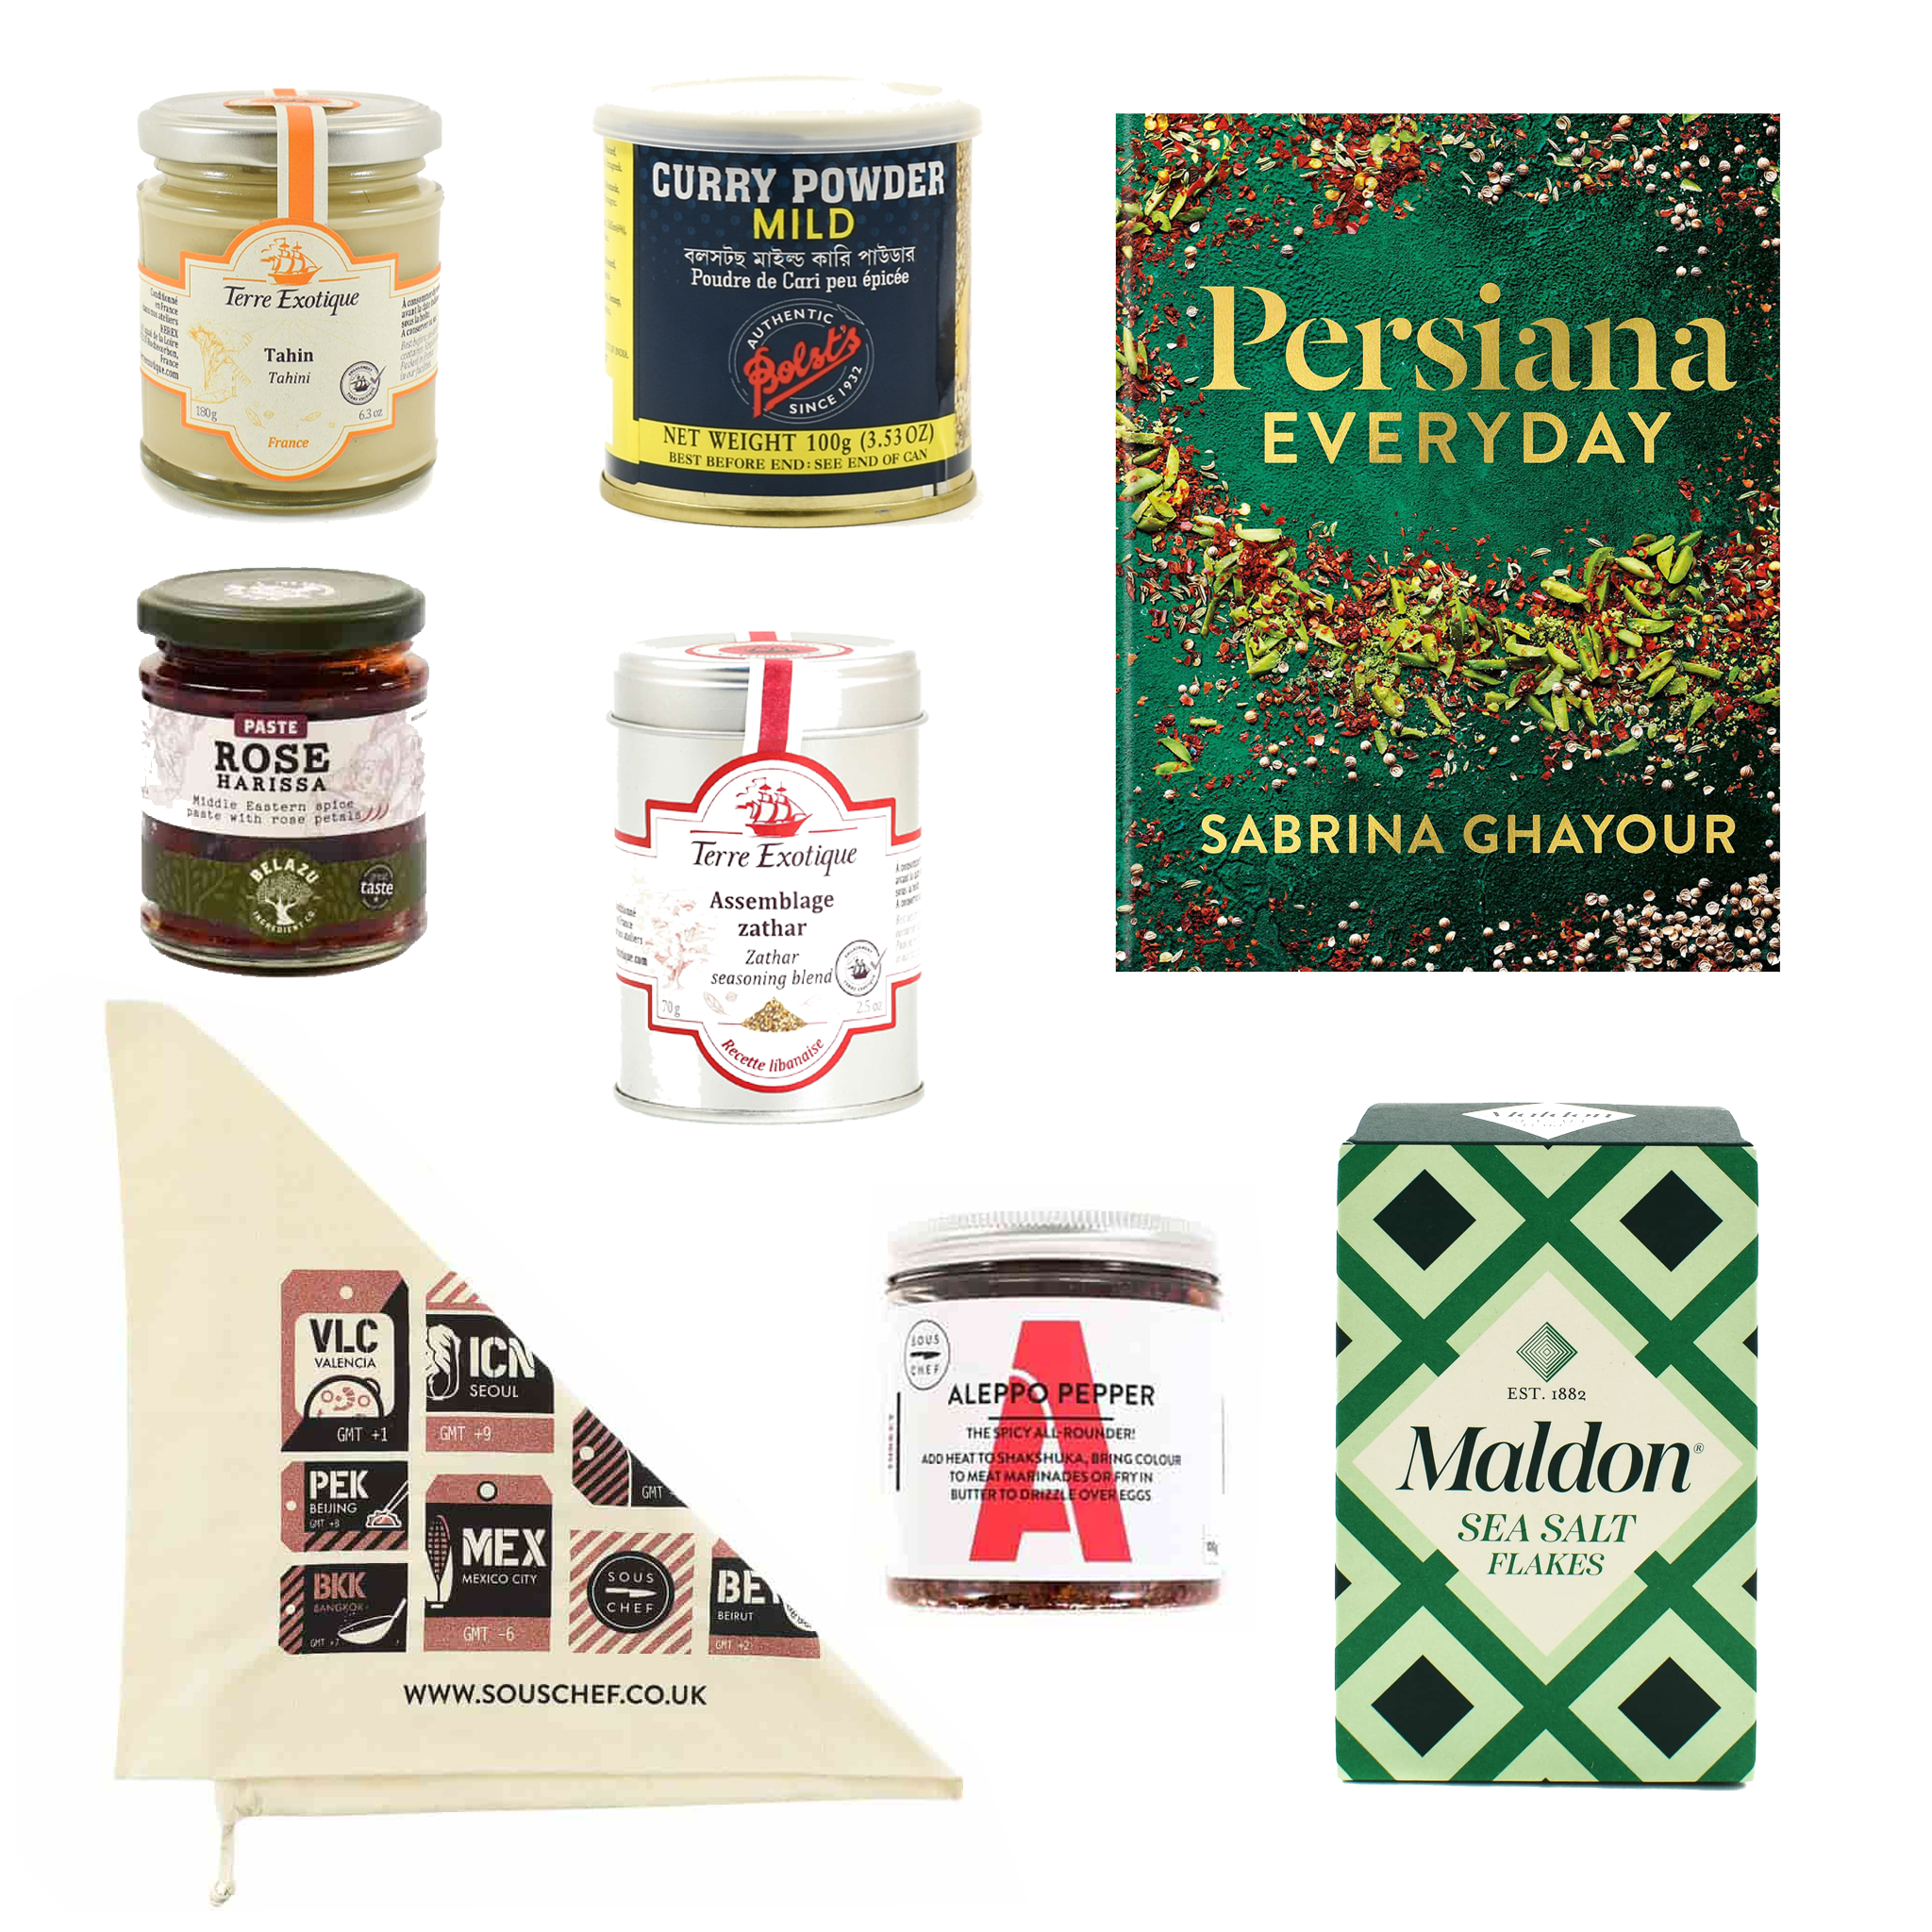 Persiana Everyday Cookbook & Ingredients Set